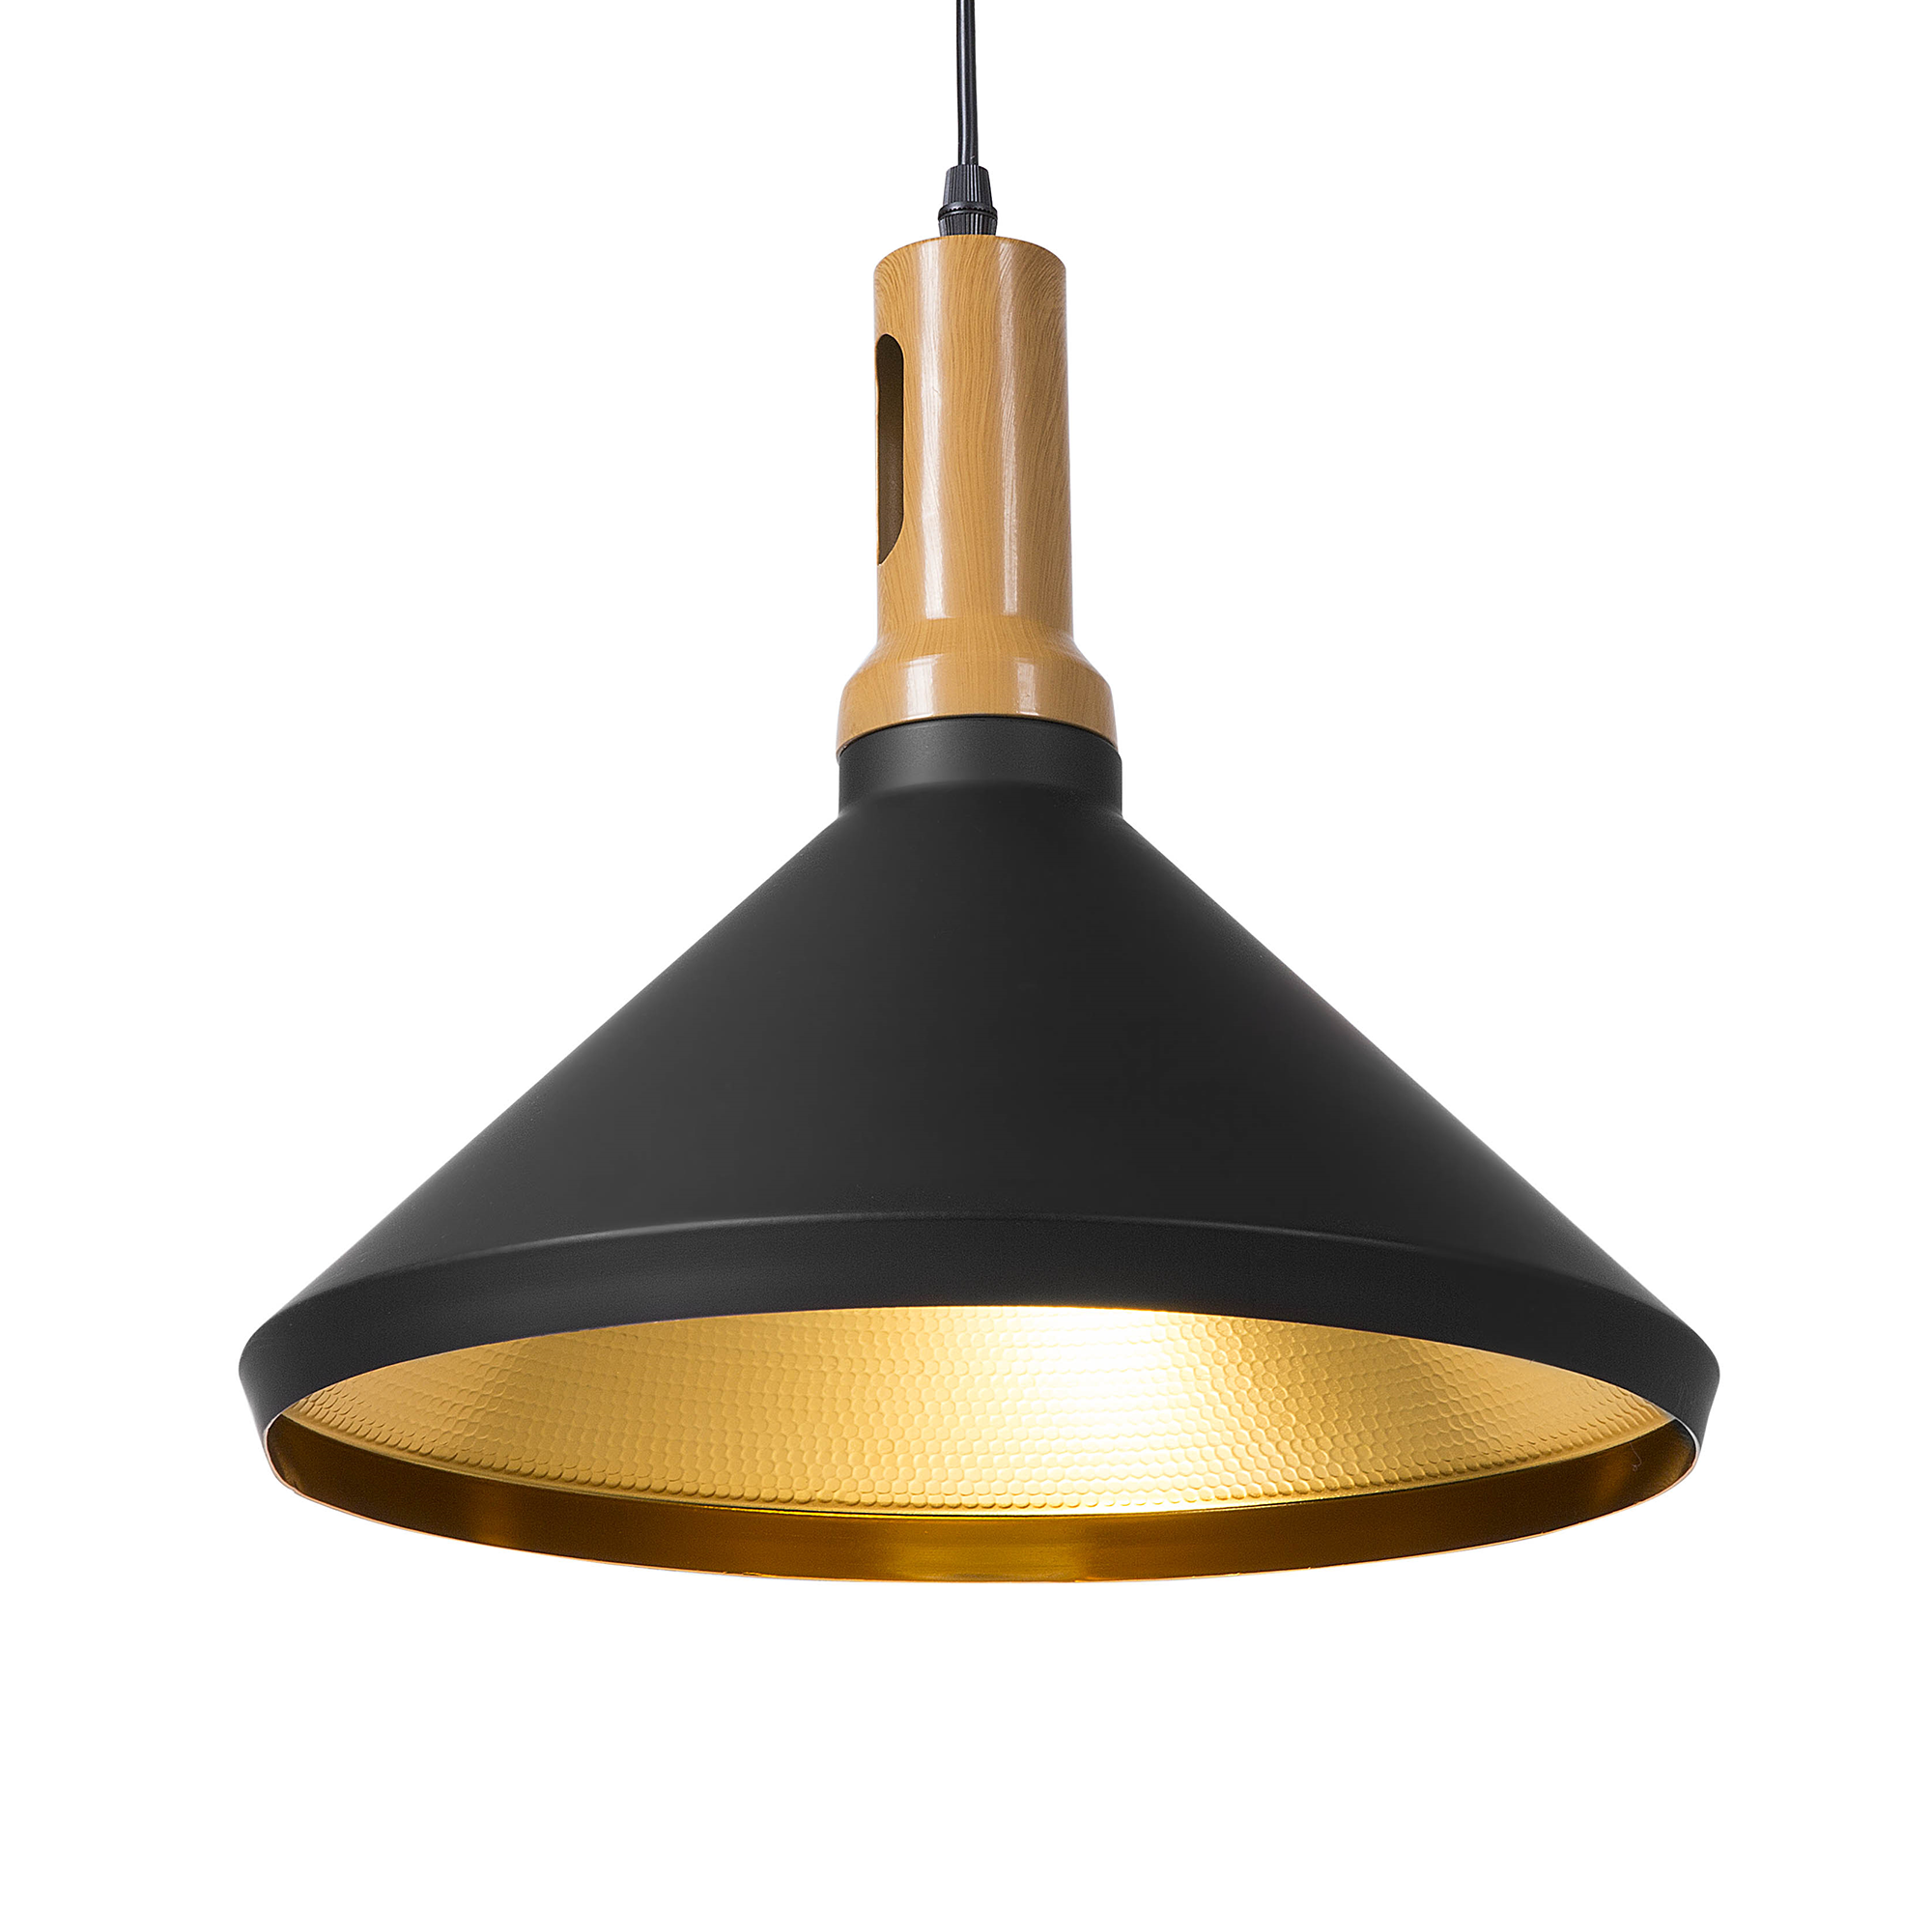 Beliani Hanging Light Pendant Lamp Black with Gold and Light Wood Aluminium Cone Shade Industrial Design